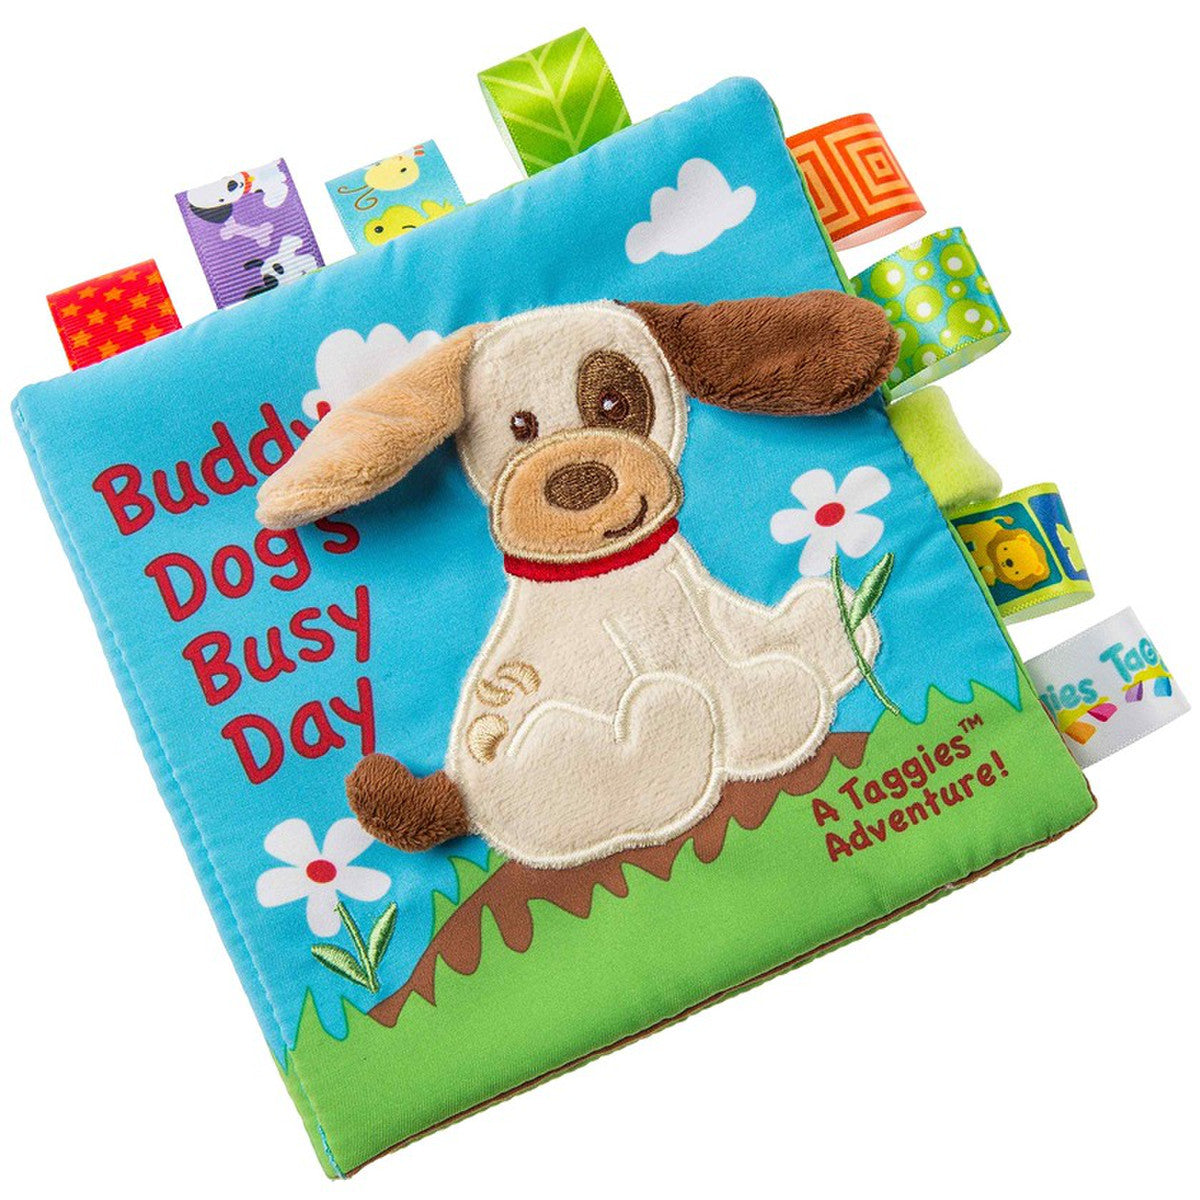 Taggies Buddy Dog's Busy Day Soft Book